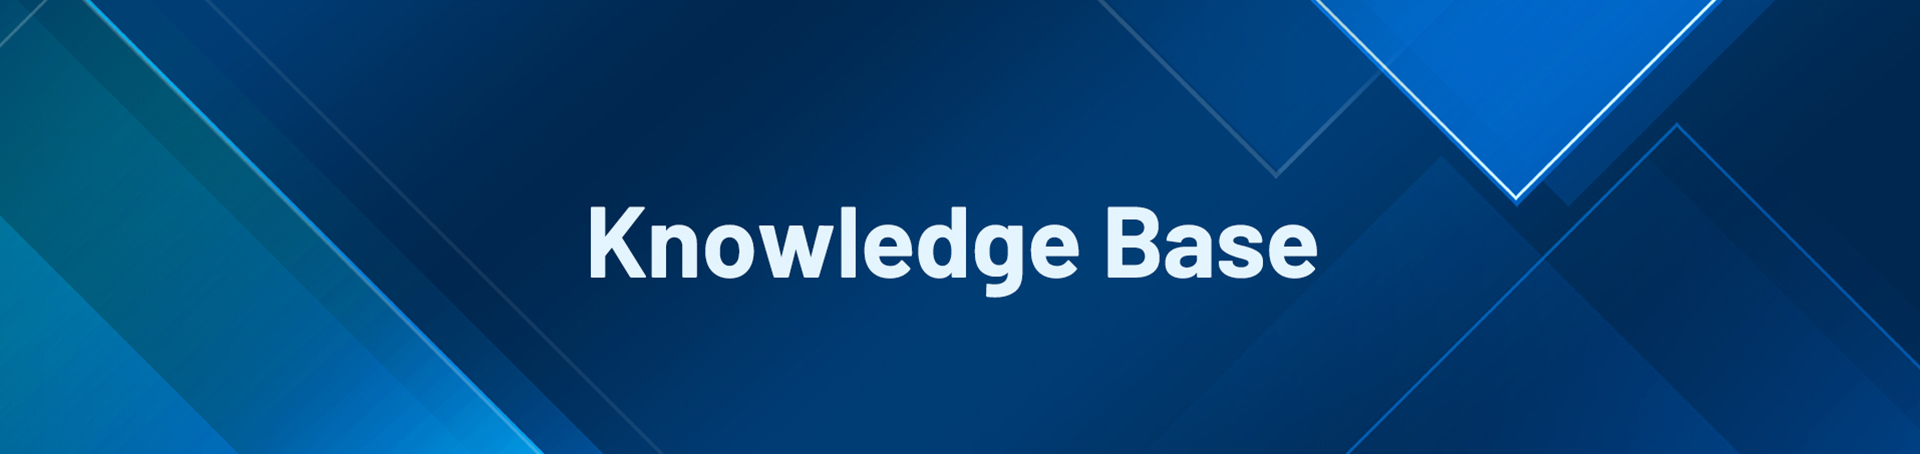 Knowledge-Base